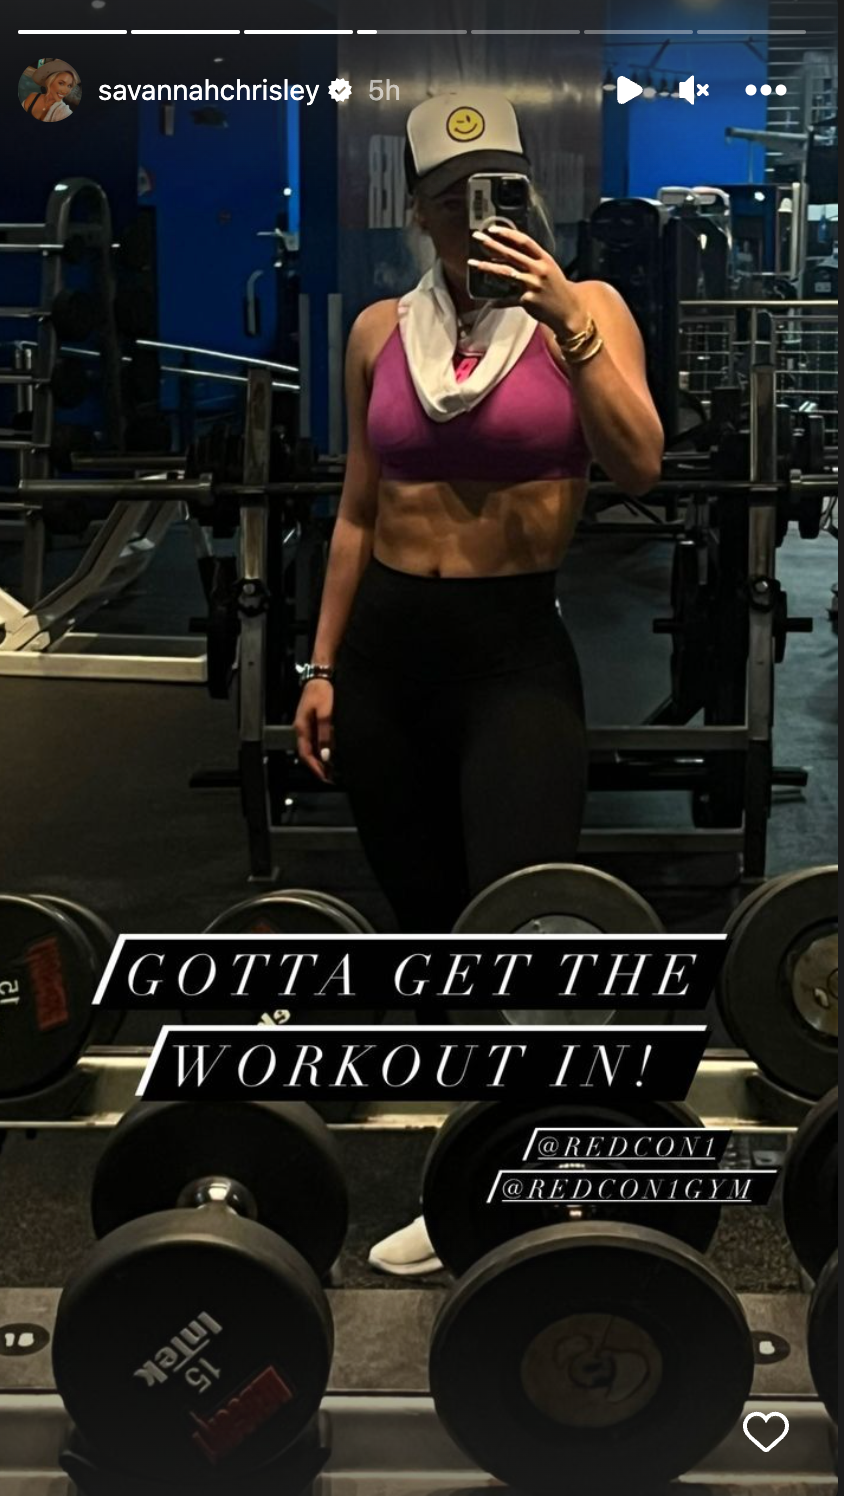 Savannah Chrisley flaunts abs in gym photo